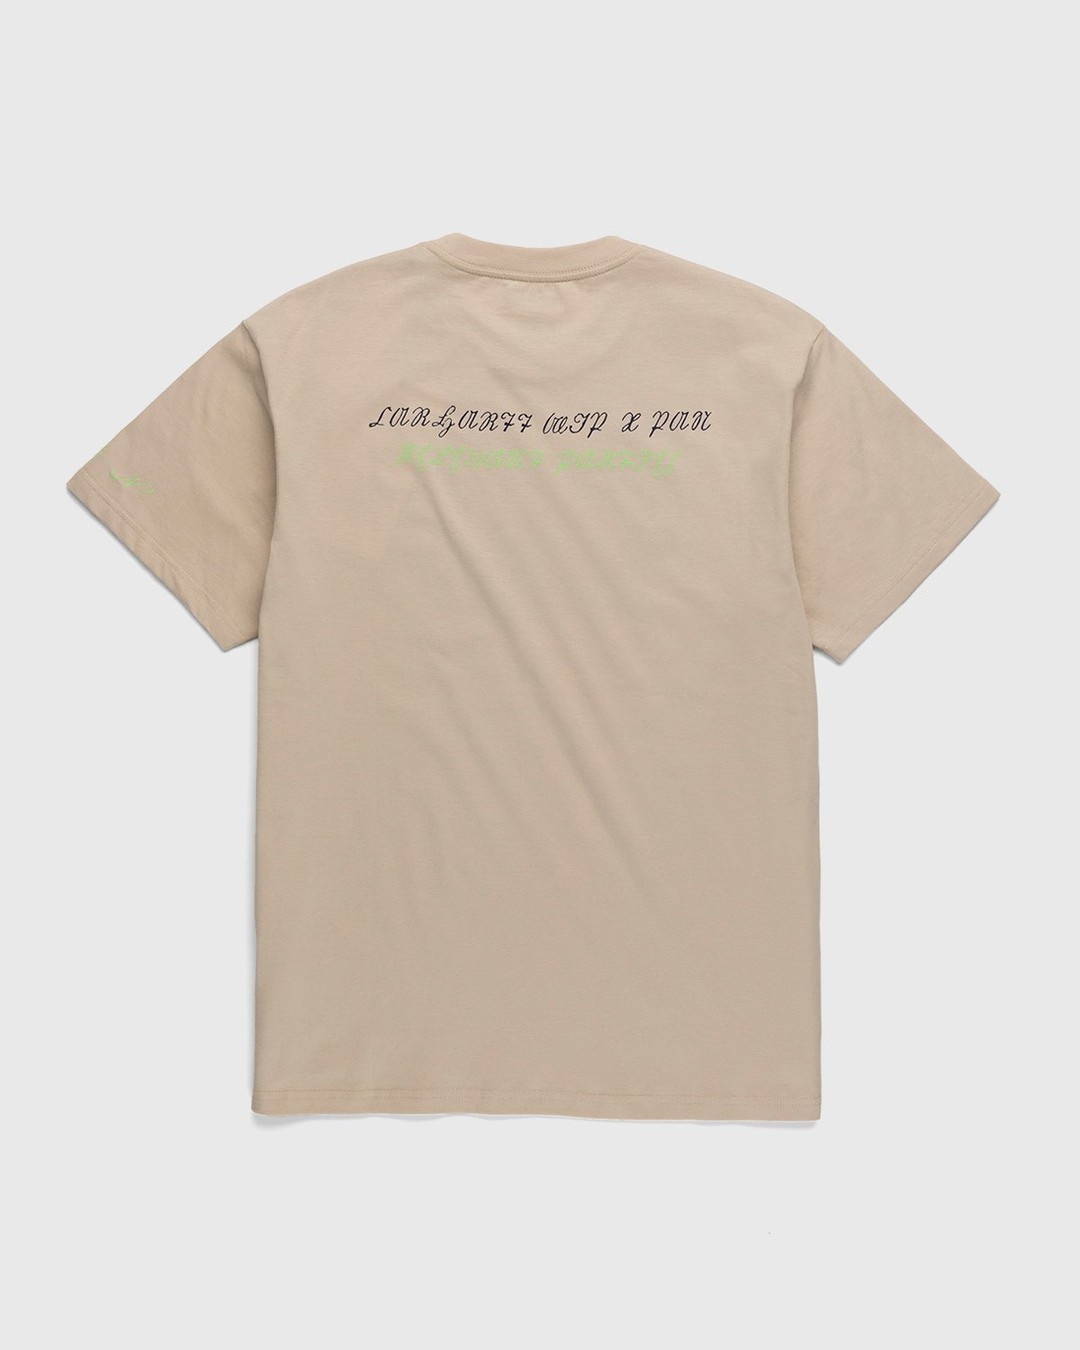 Carhartt WIP – Pan T-Shirt Sand | Highsnobiety Shop